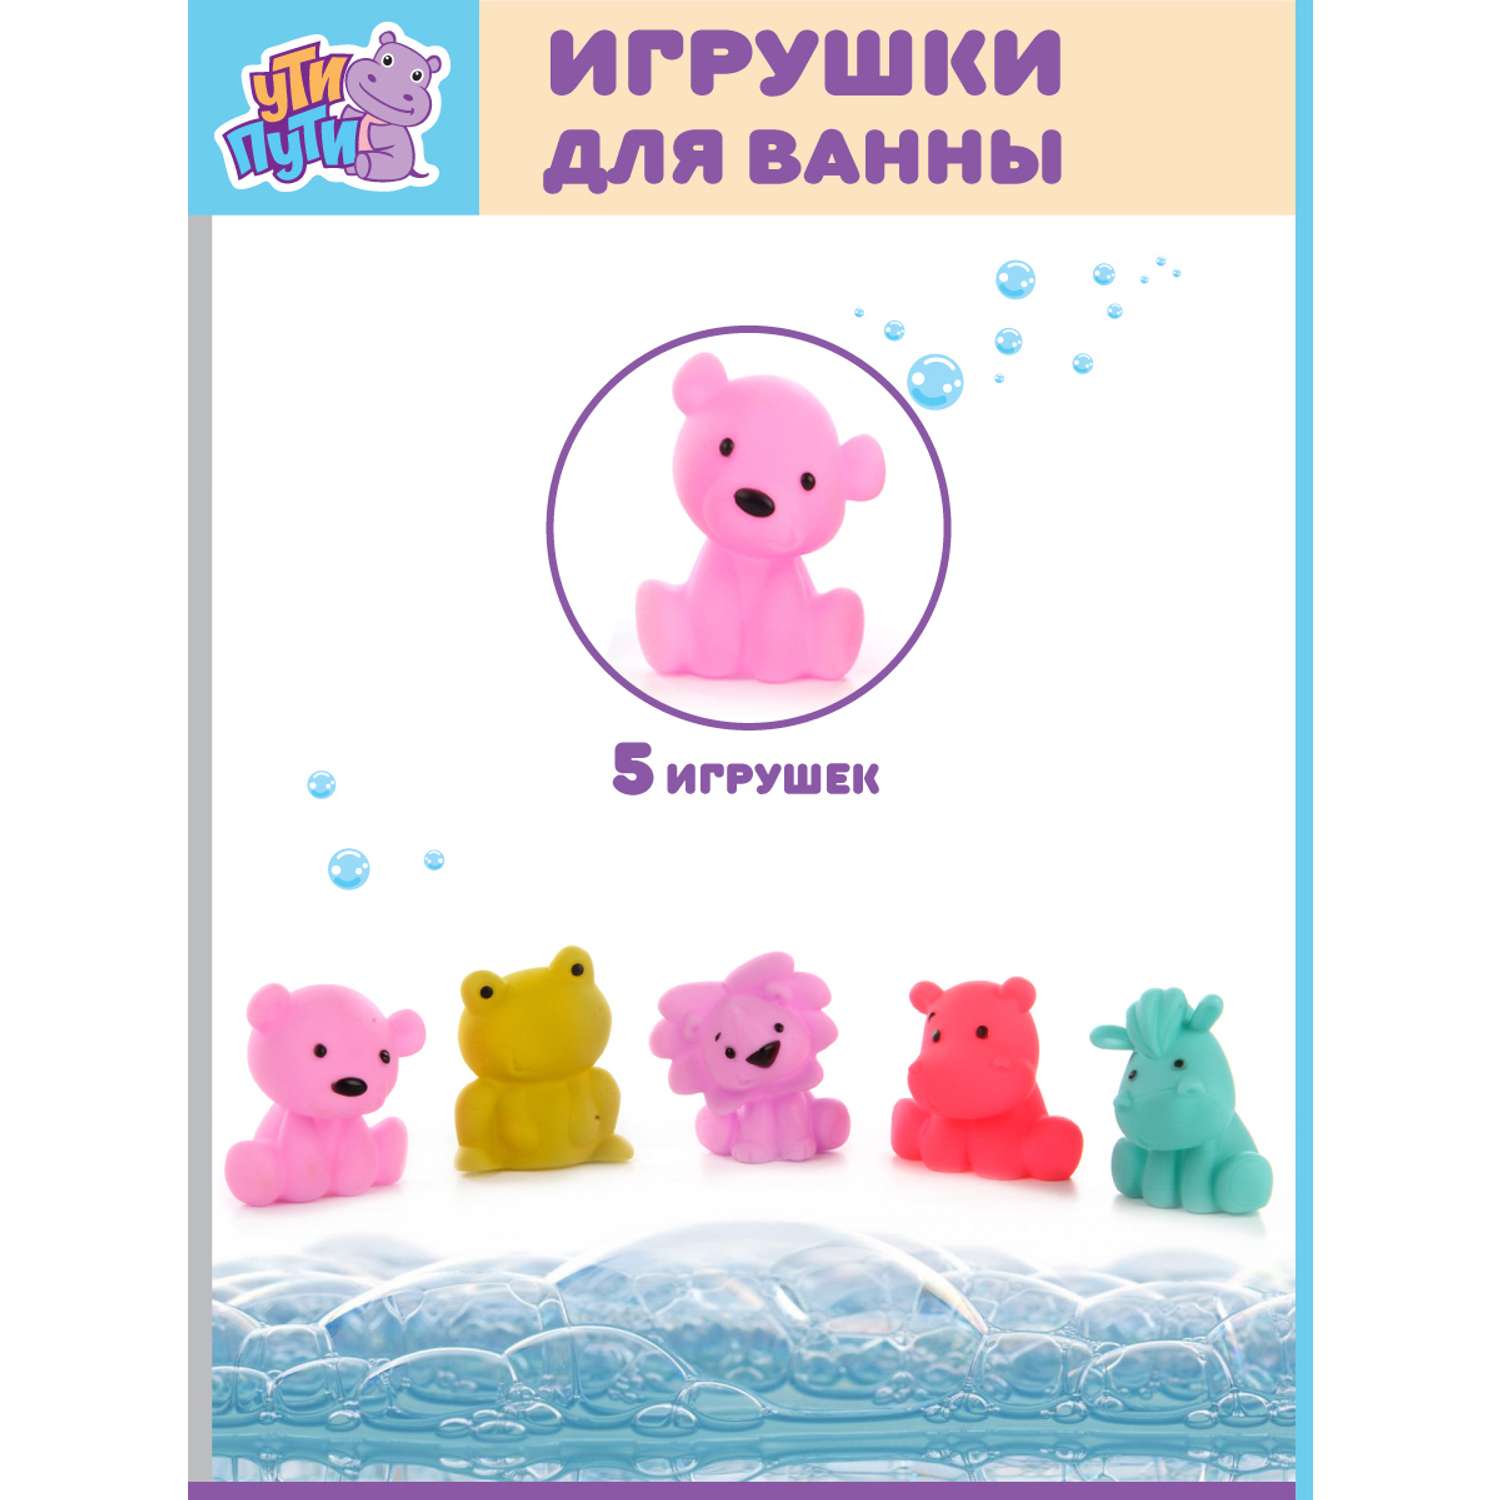 Игрушки для ванны Ути Пути Сафари 5 игрушек - фото 1